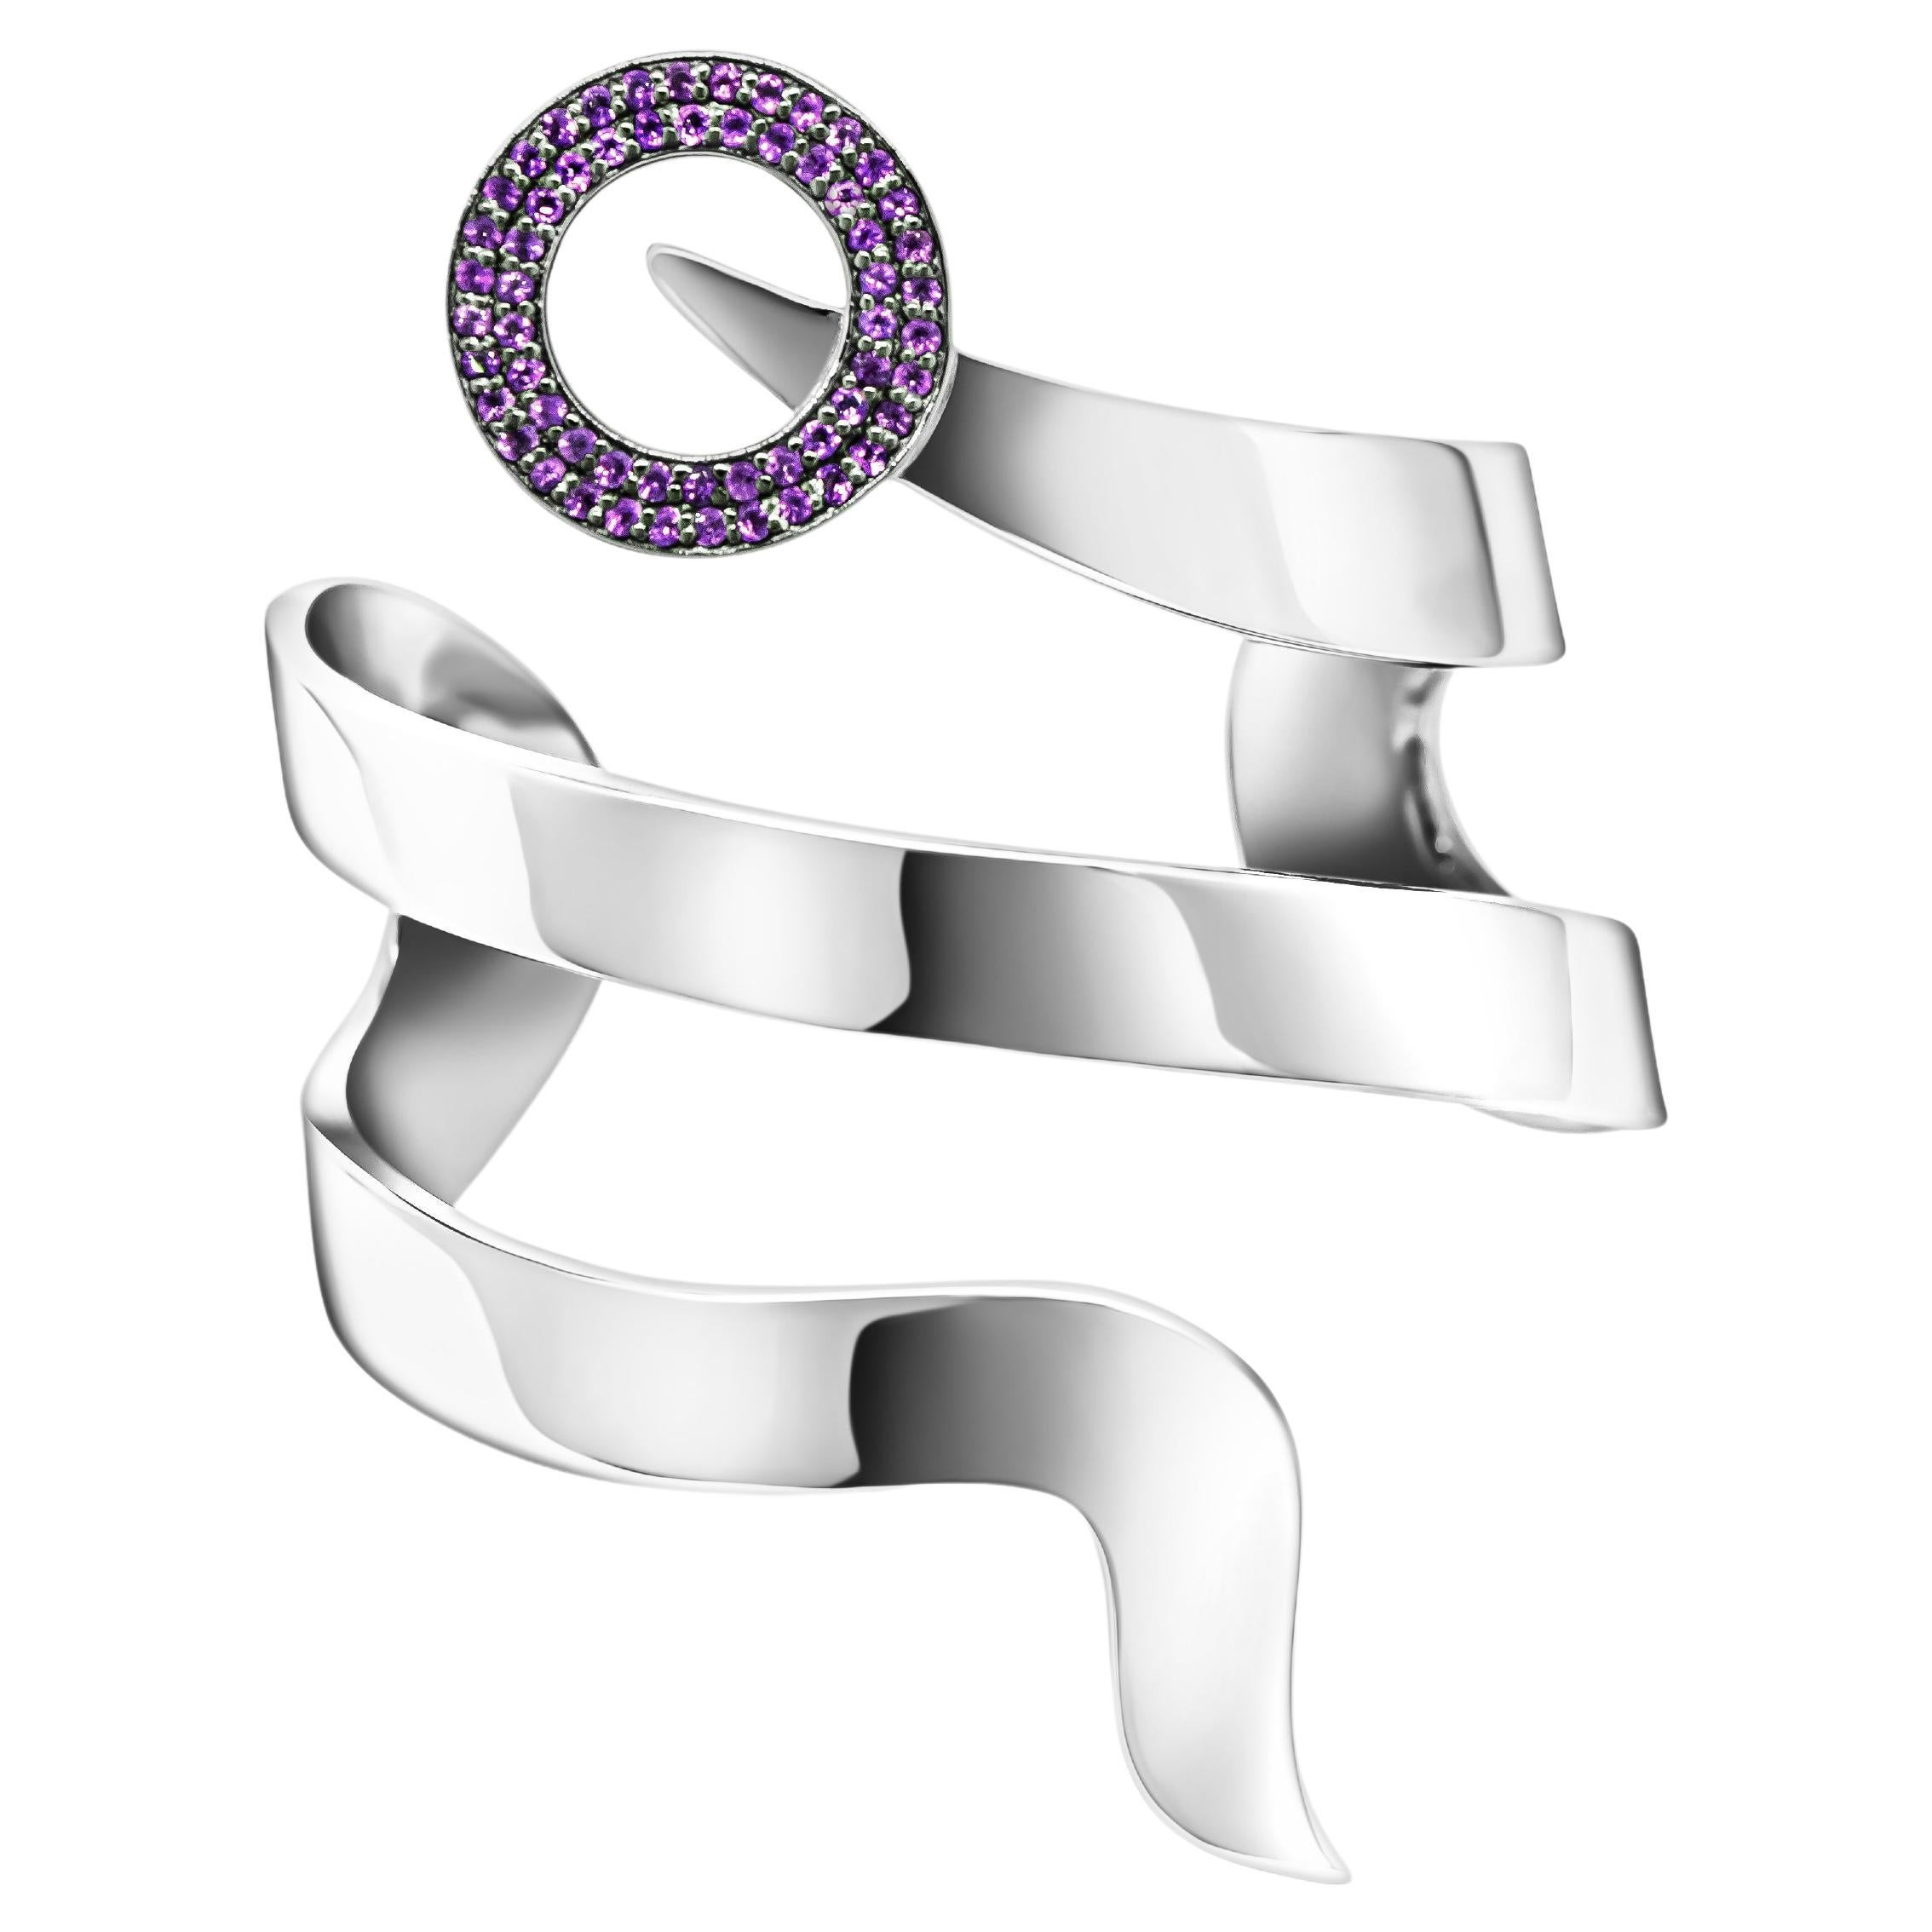  Snake Cuff Bracelet in Sterling Silver with  Amethyst